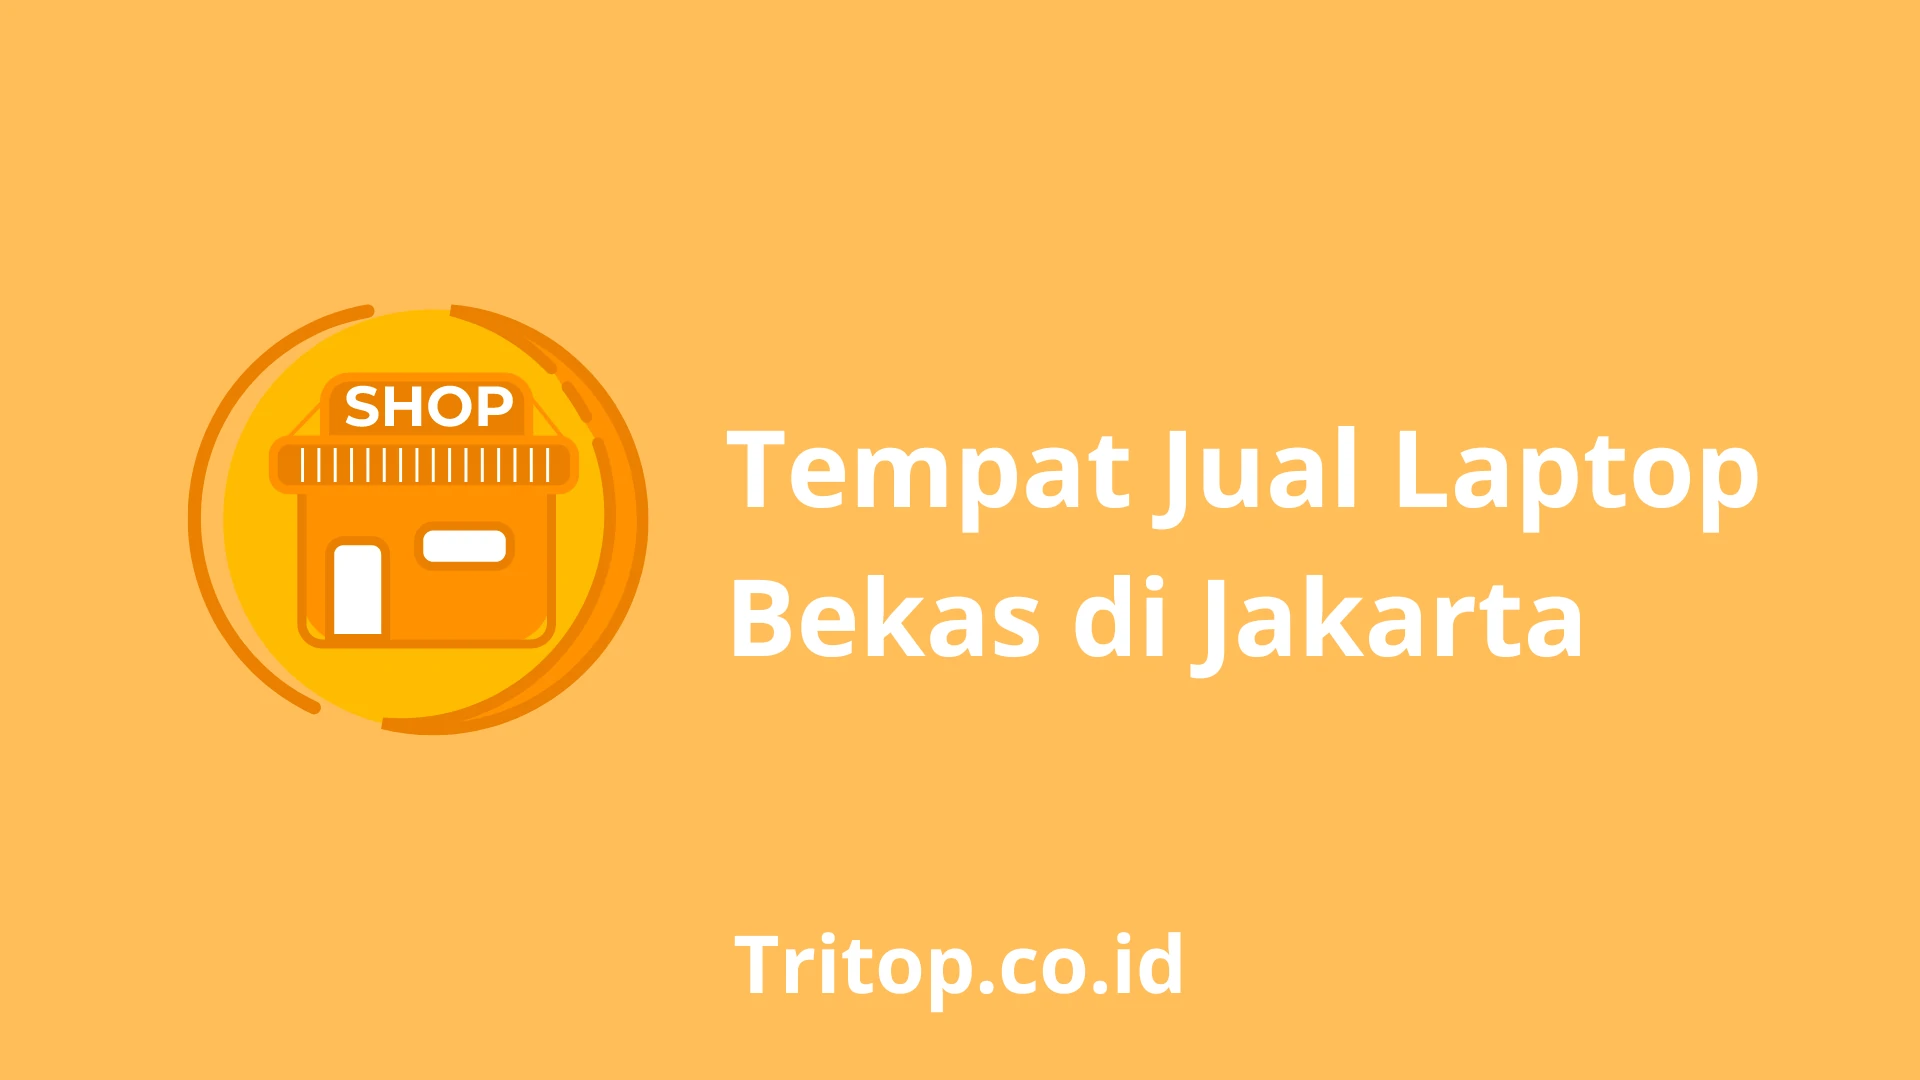 Tempat Jual Laptop Bekas di Jakarta tritop.co.id